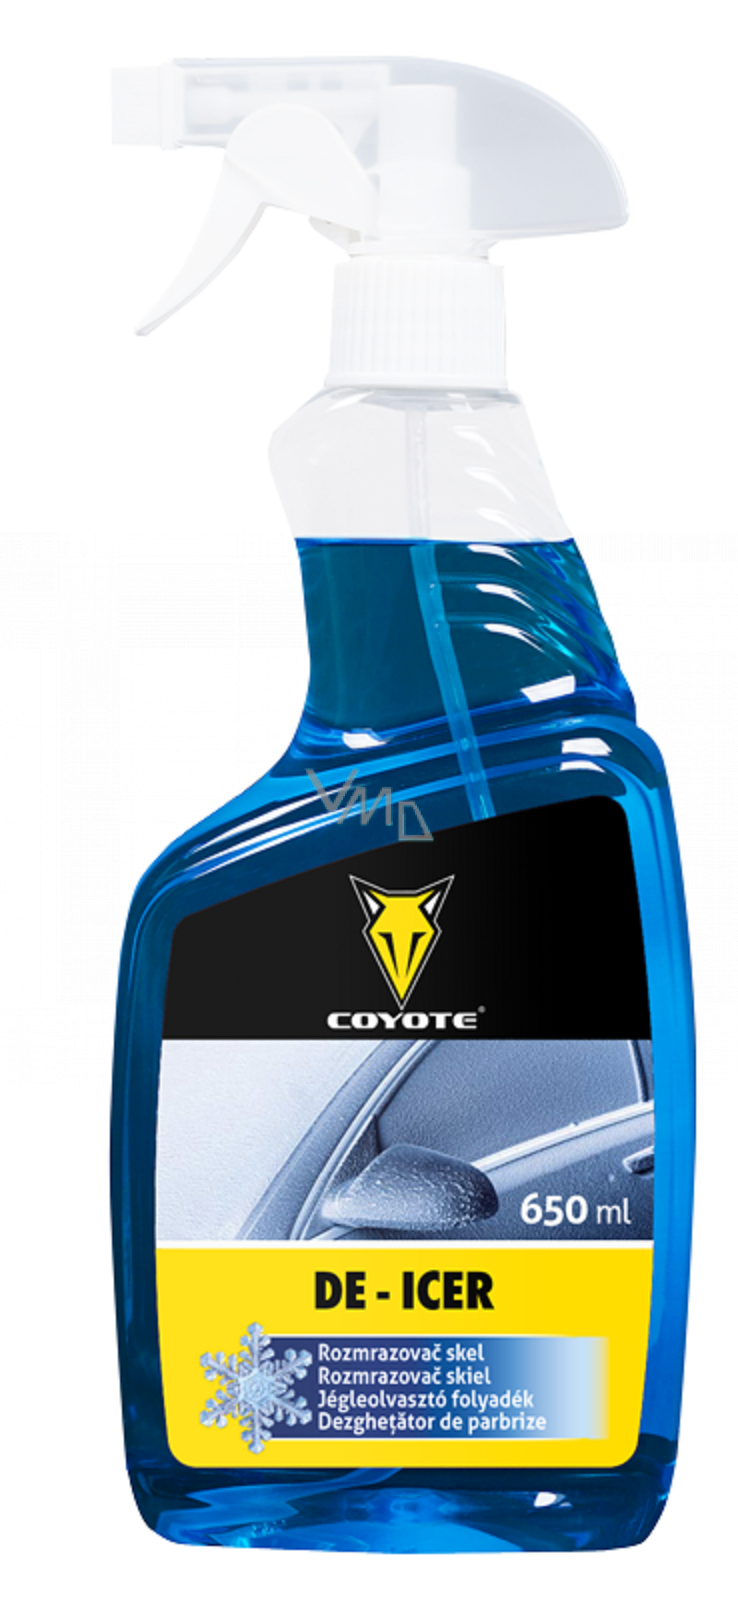 Coyote De-Icer glass defroster spray 650 ml - VMD parfumerie